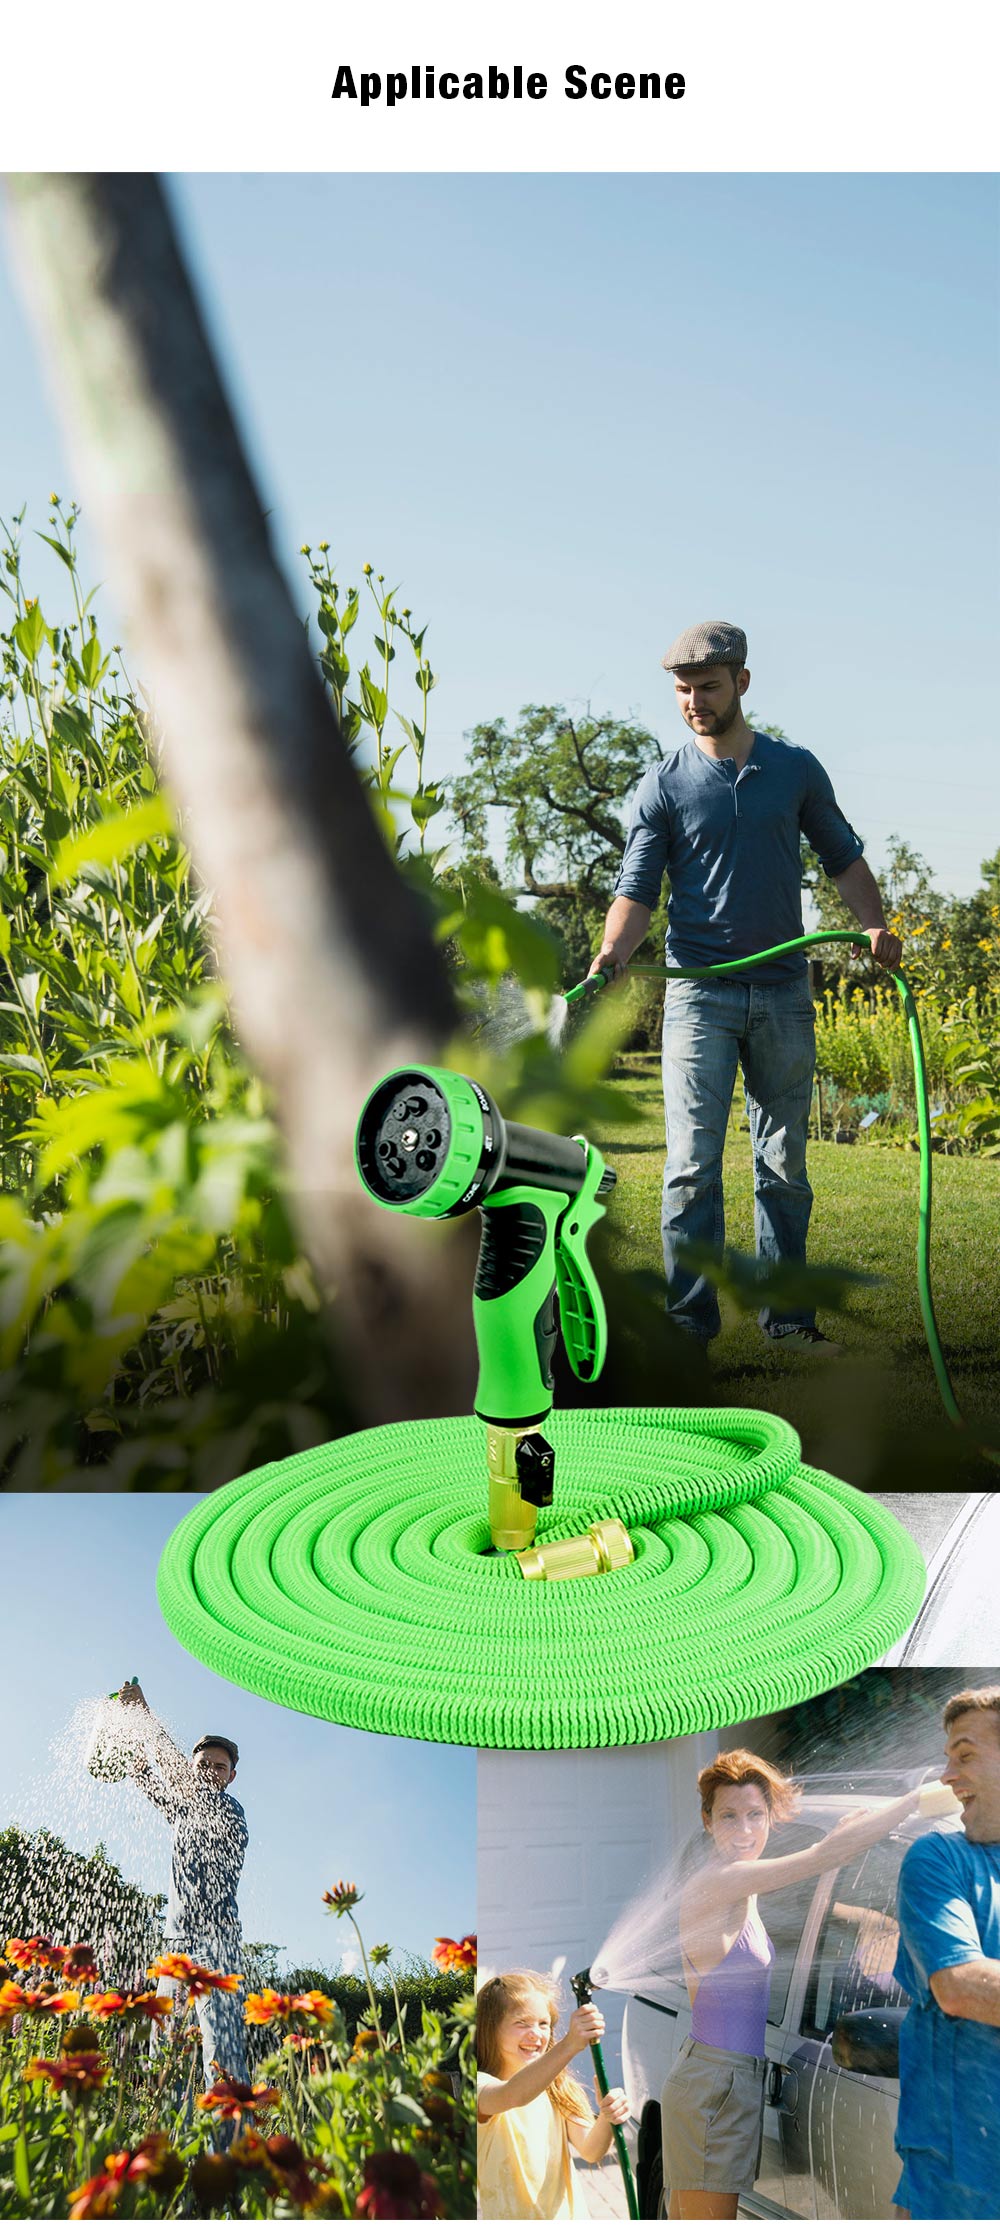 Expandable Pipe Flexible Garden Watering Hose for Gardening Vehicle Washing with Spray Gun